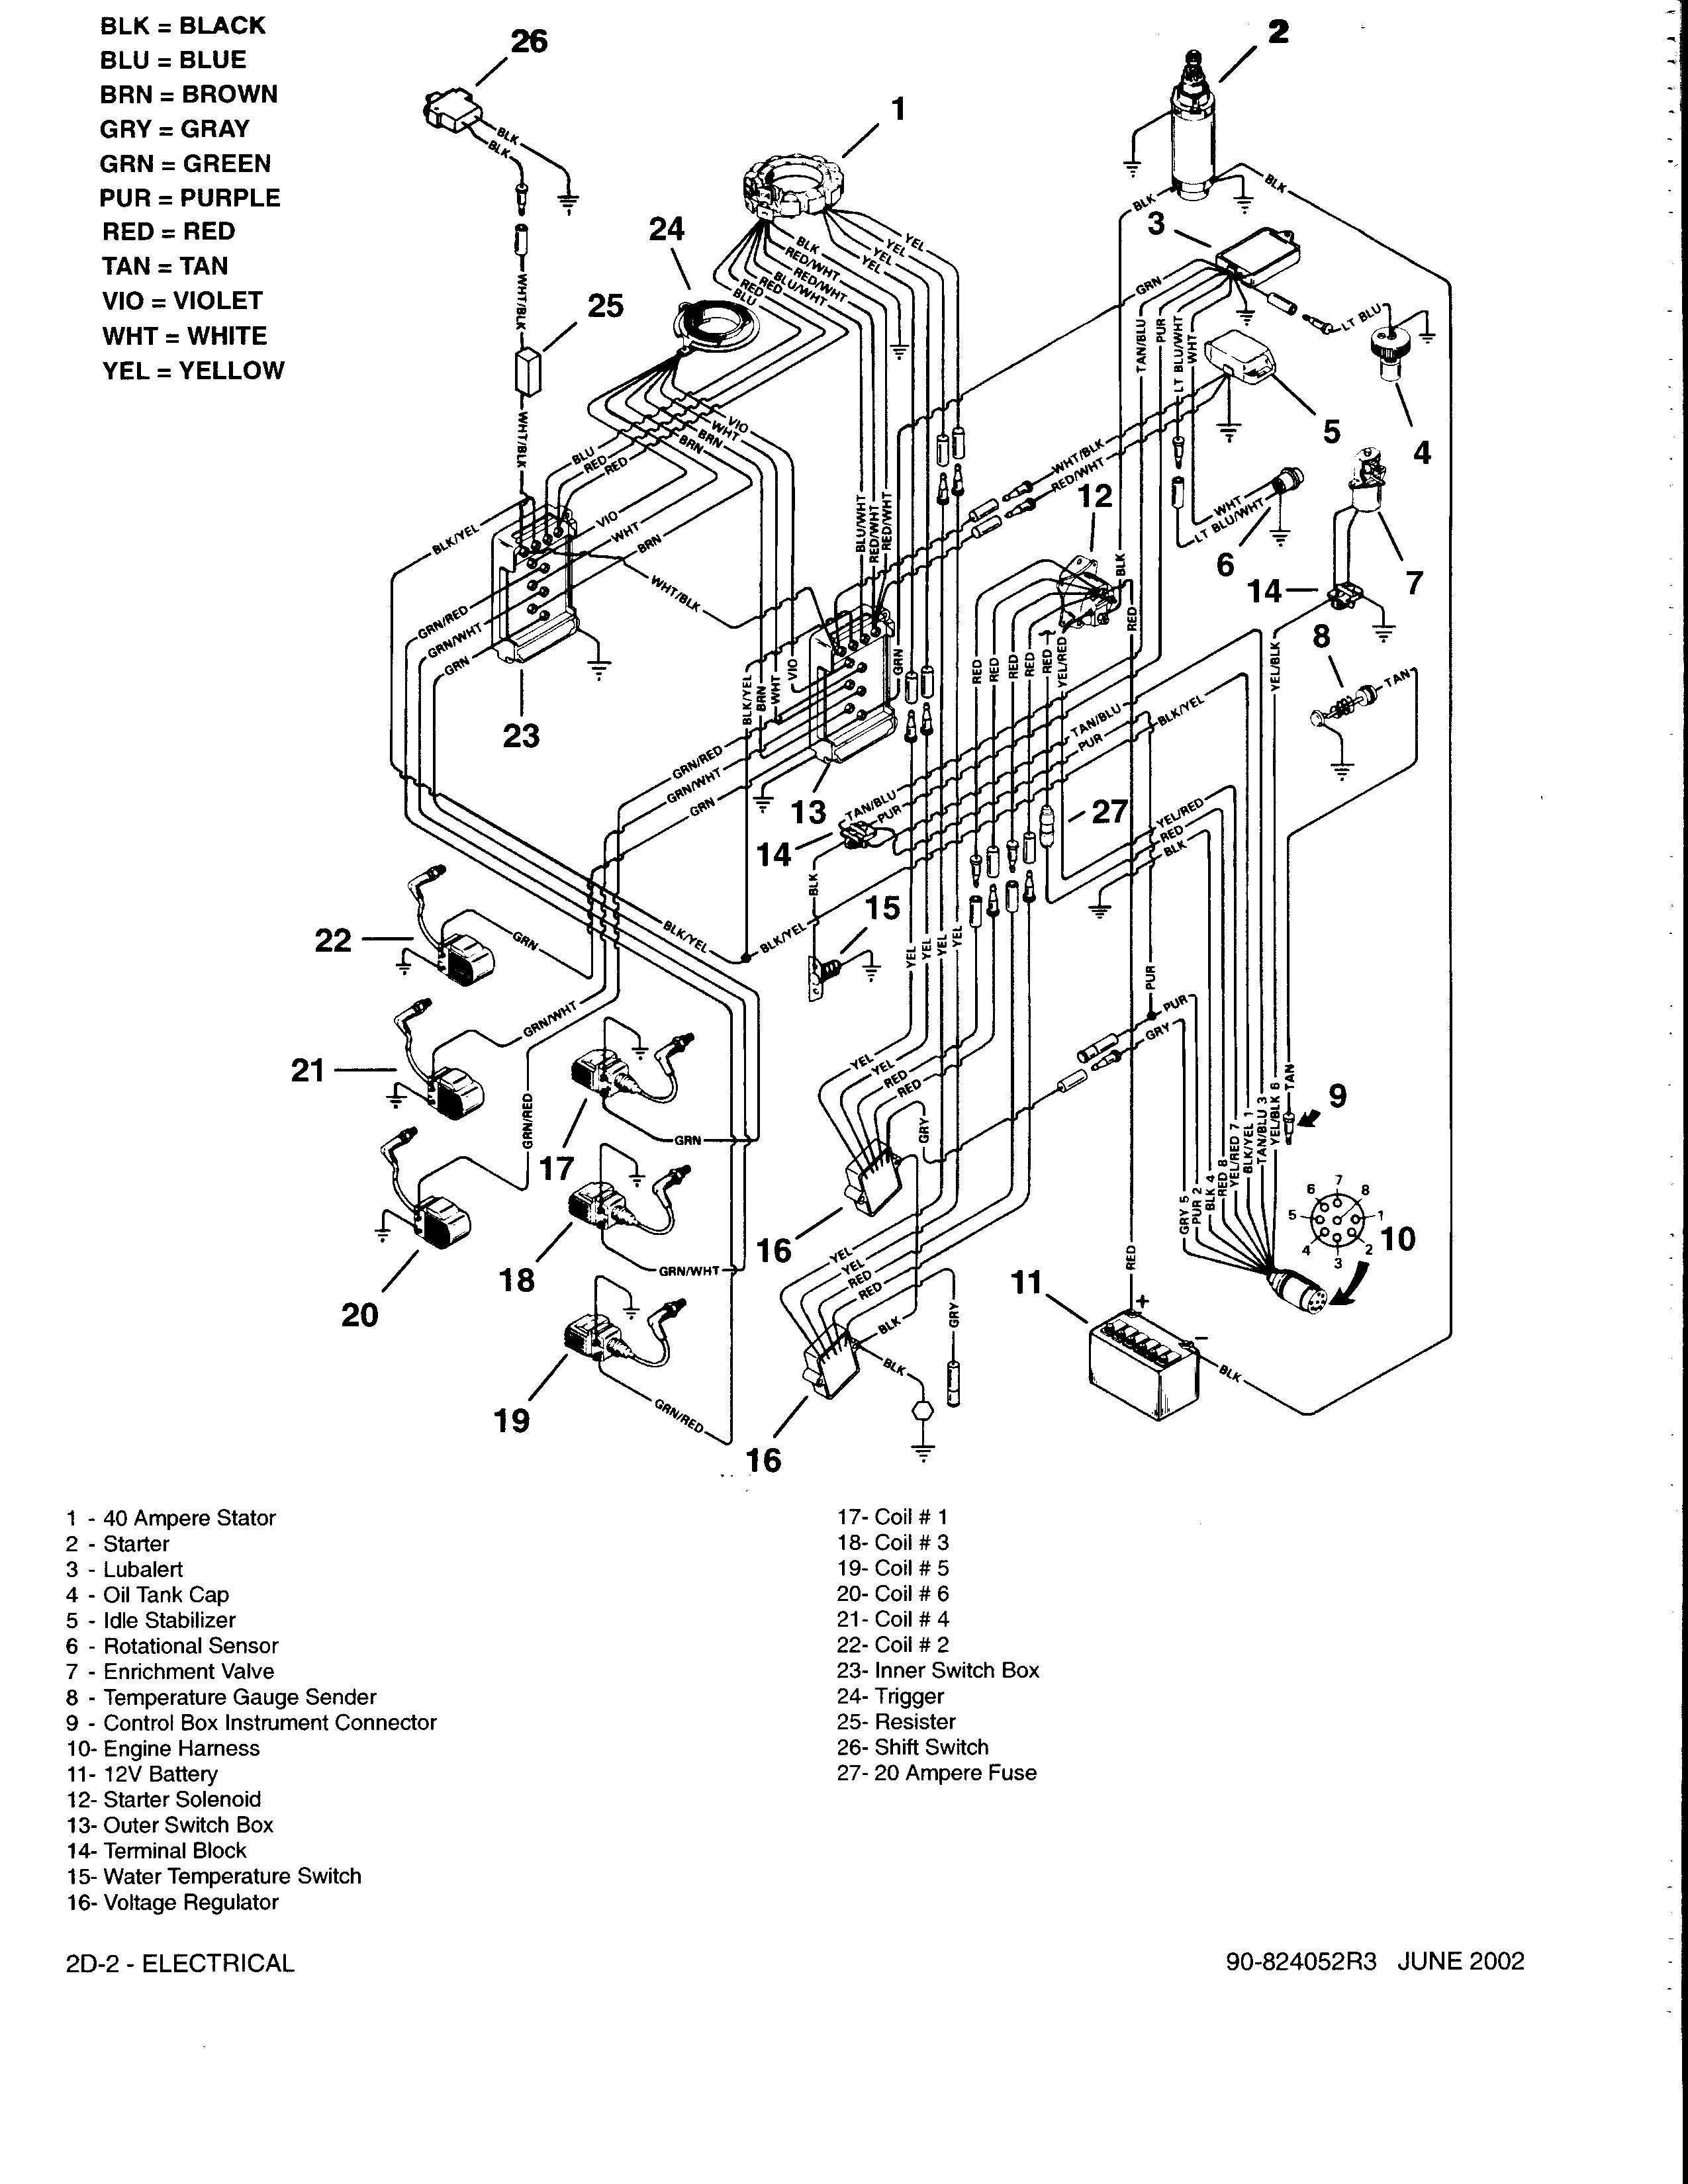 Honda Civic Engine Mount Diagram Replacing Fuel Filter Honda Civic Of Honda Civic Engine Mount Diagram